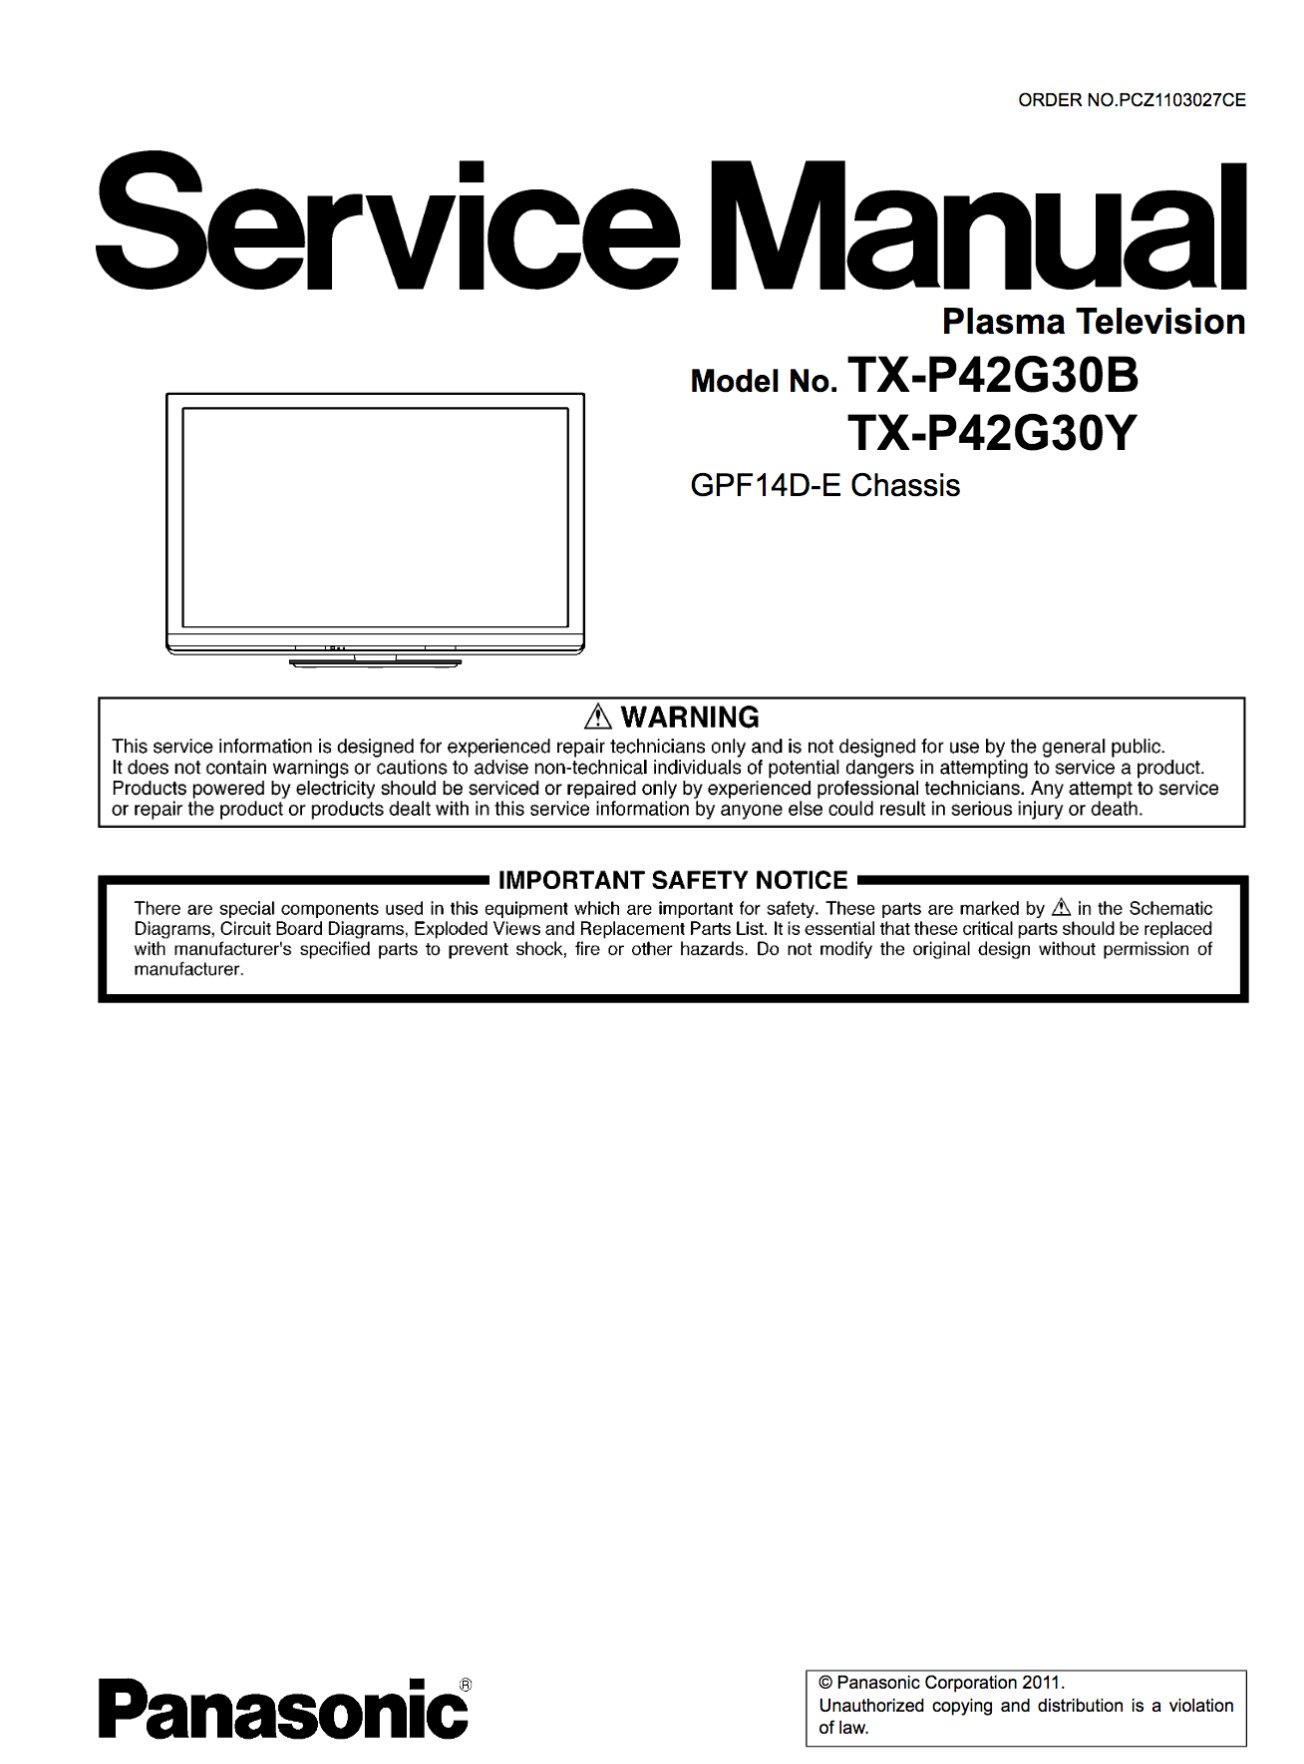 Panasonic TX-P42G30B TX-P42G30Y Service Manual